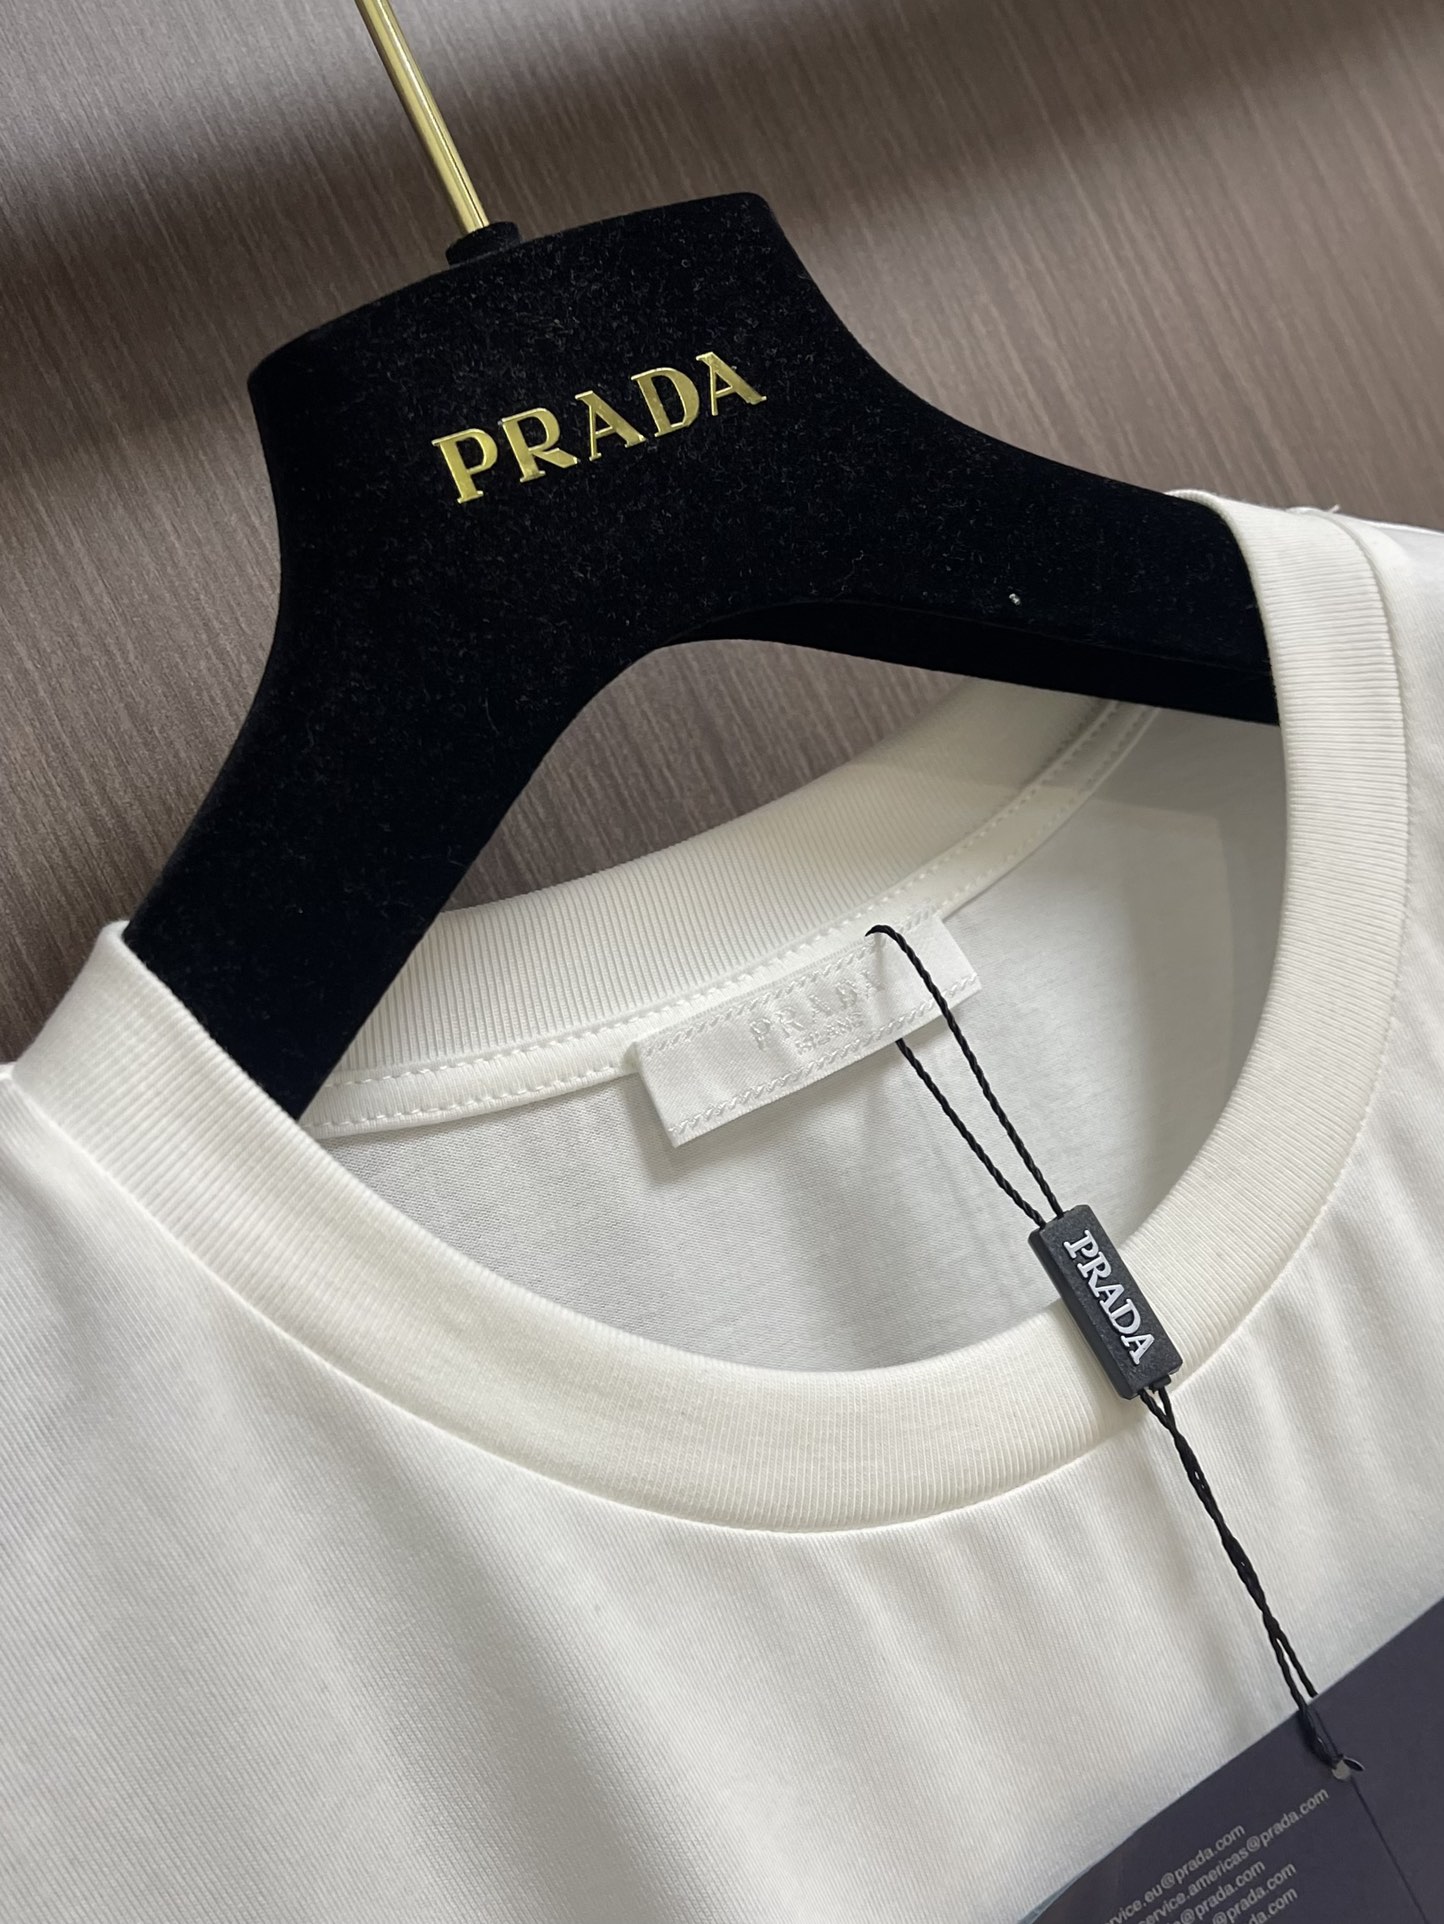 Prada经典款logo胶印圆领T恤优雅气质的裁剪设计,标志性的经典版型客供纯棉面料,透气舒适感极佳柔软